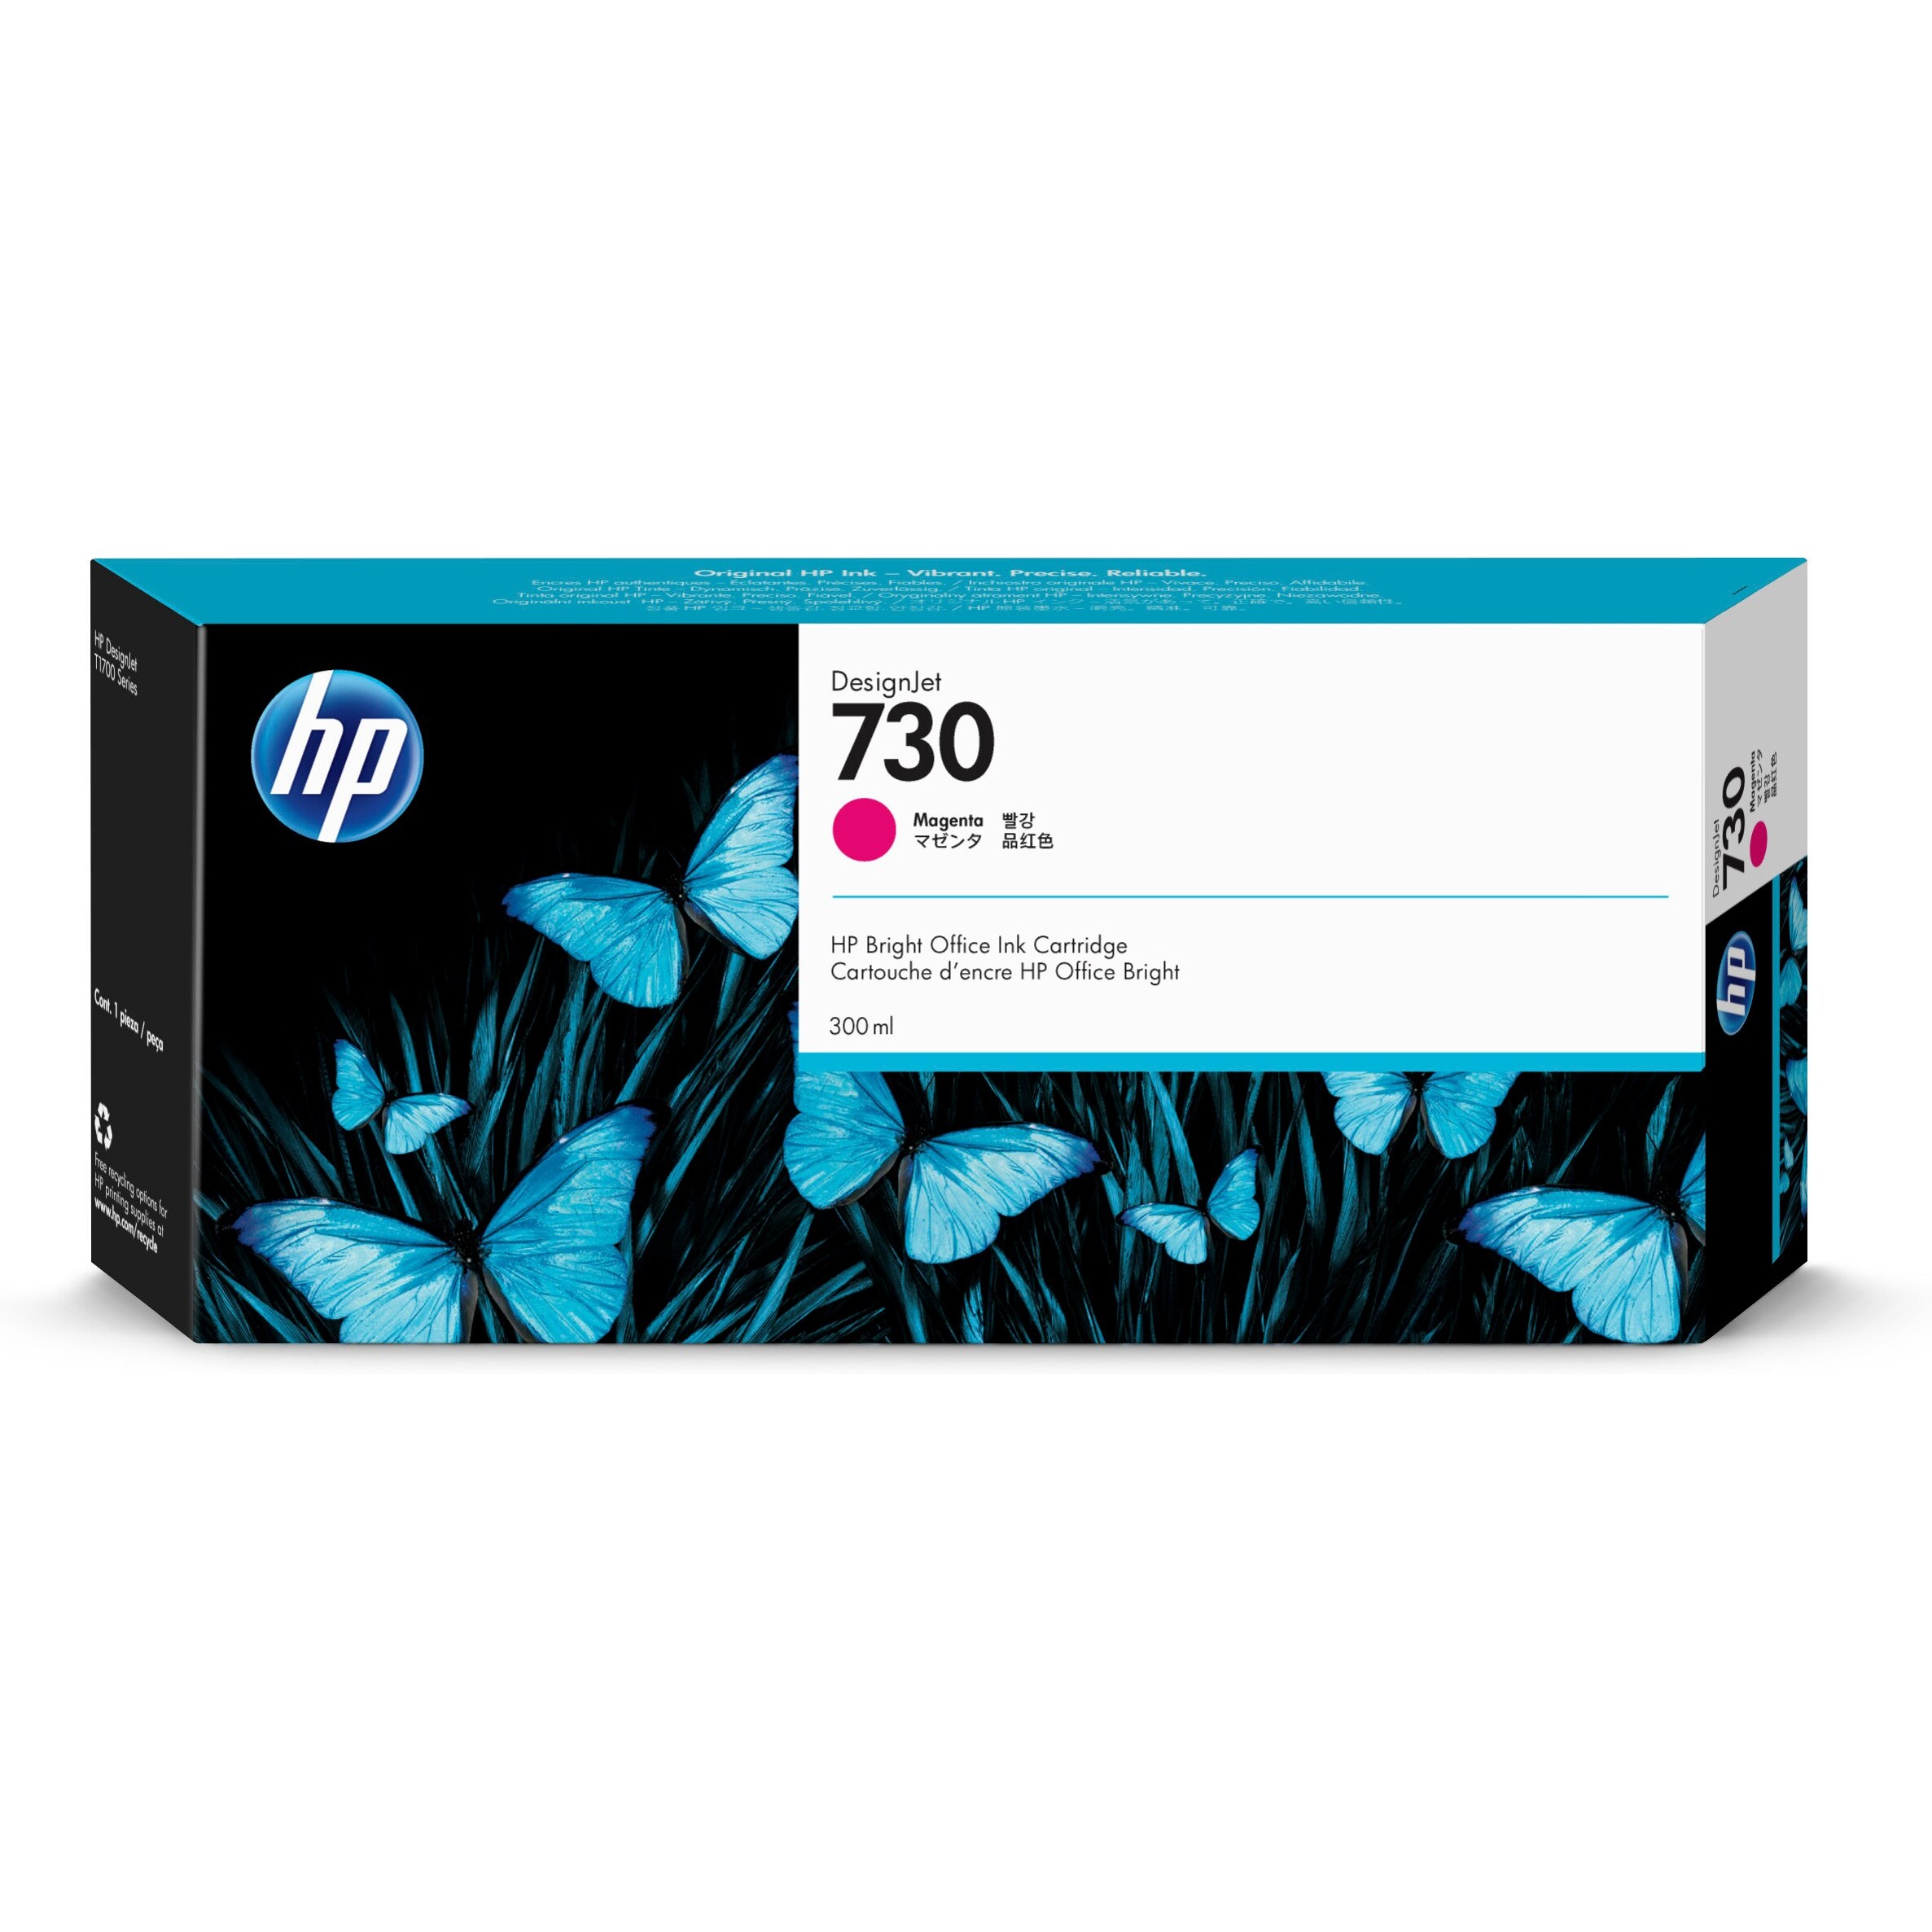 HP 730 300-ml Magenta DesignJet ink cartridge - P2V69A